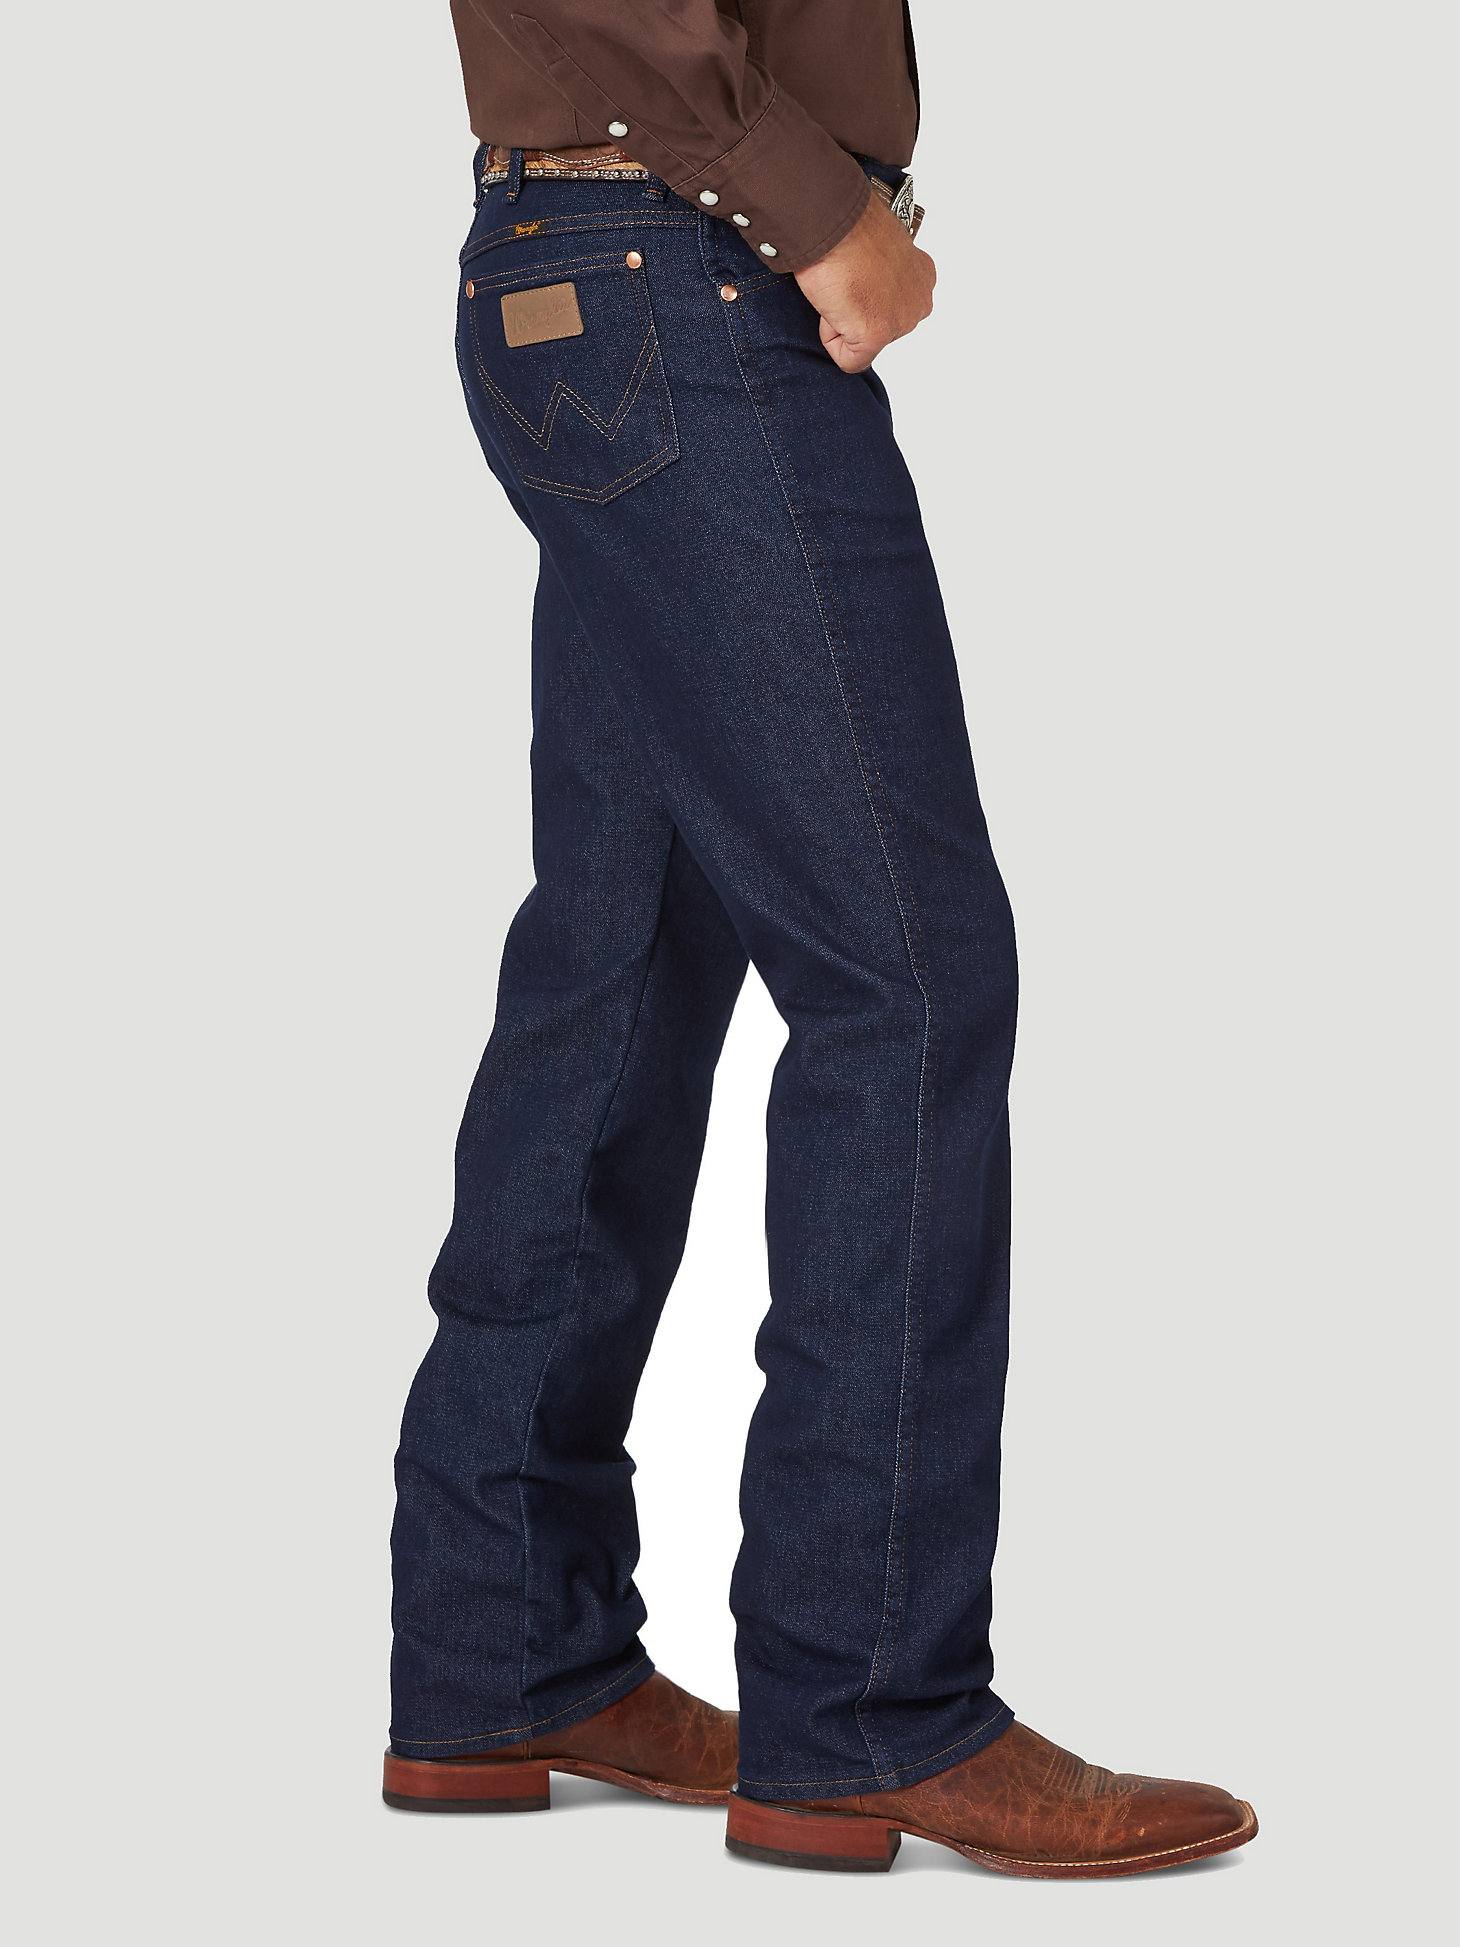 Wrangler® Cowboy Cut® Slim Fit Active Flex Jeans in Prewashed Indigo alternative view 1